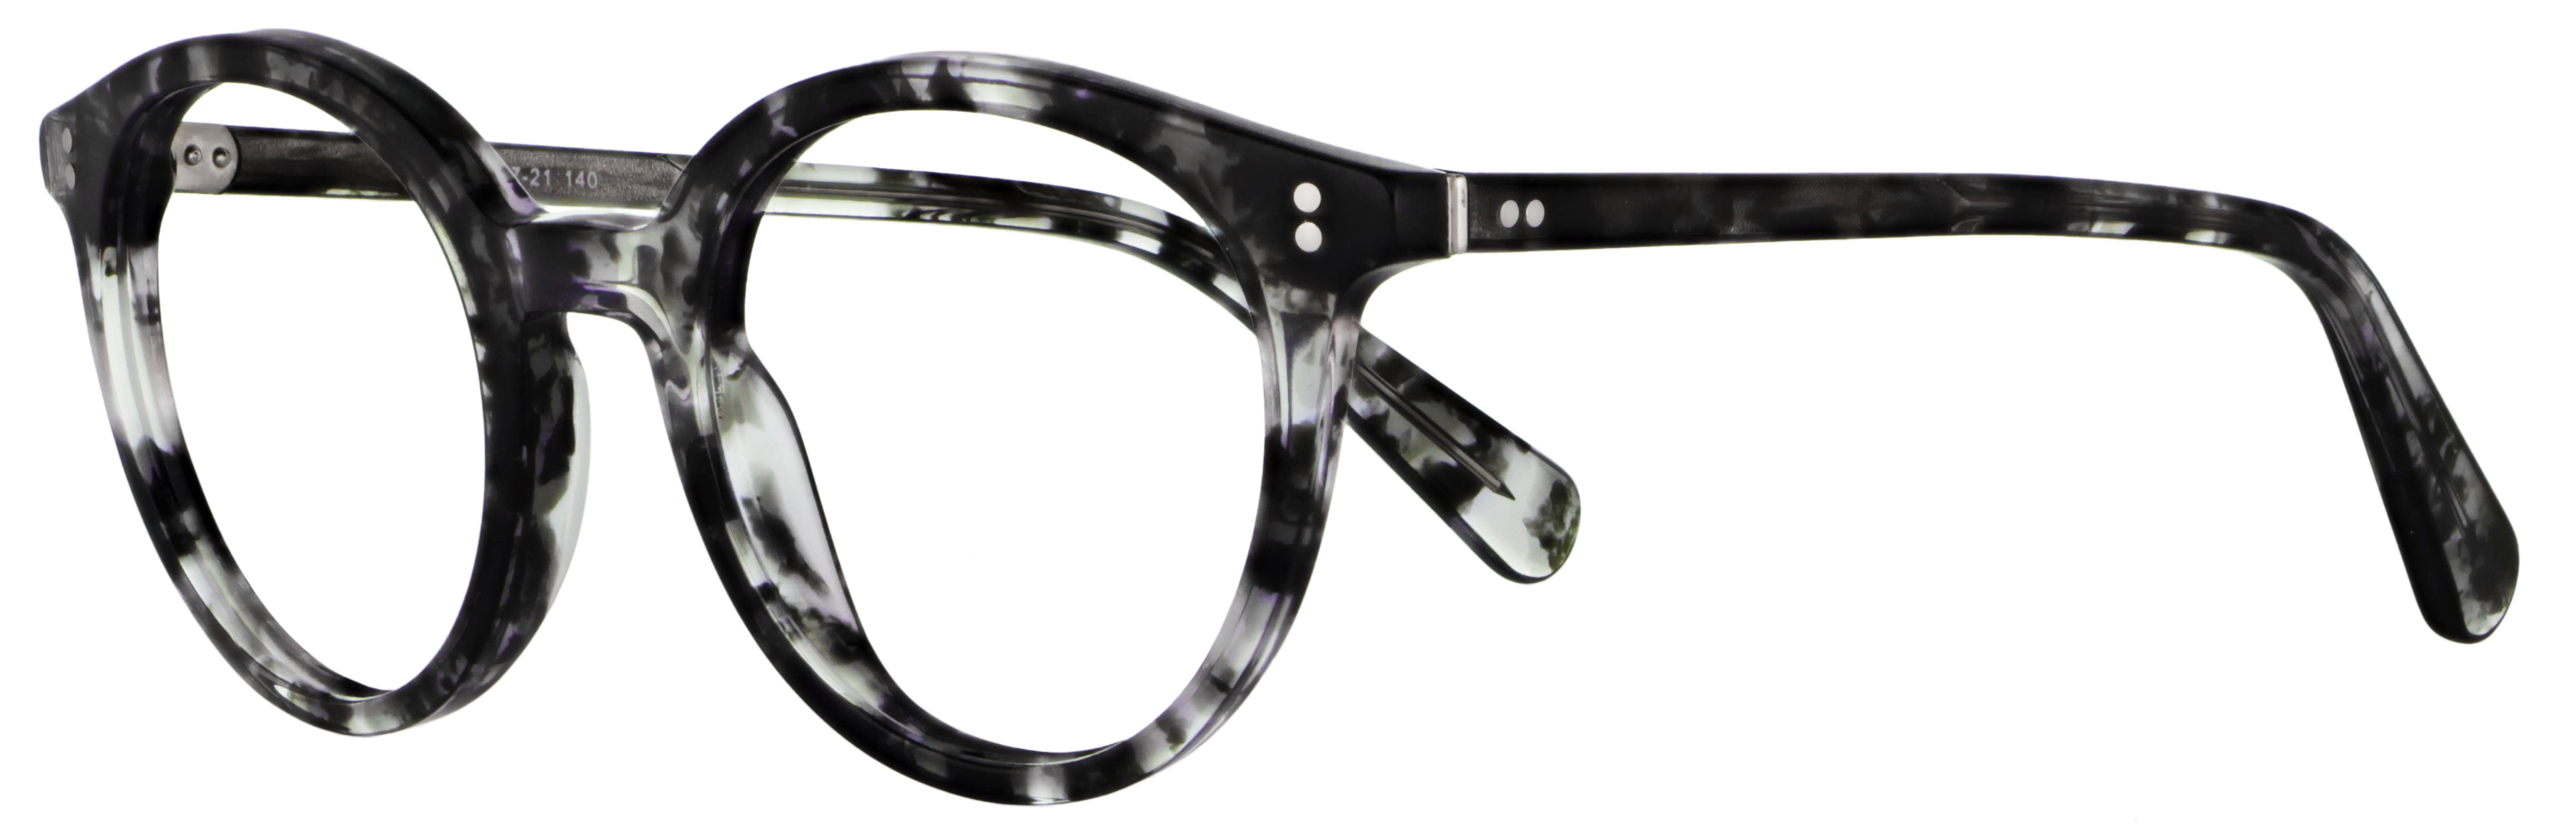 abele optik Brille 139731 schwarz & transparent gemustert